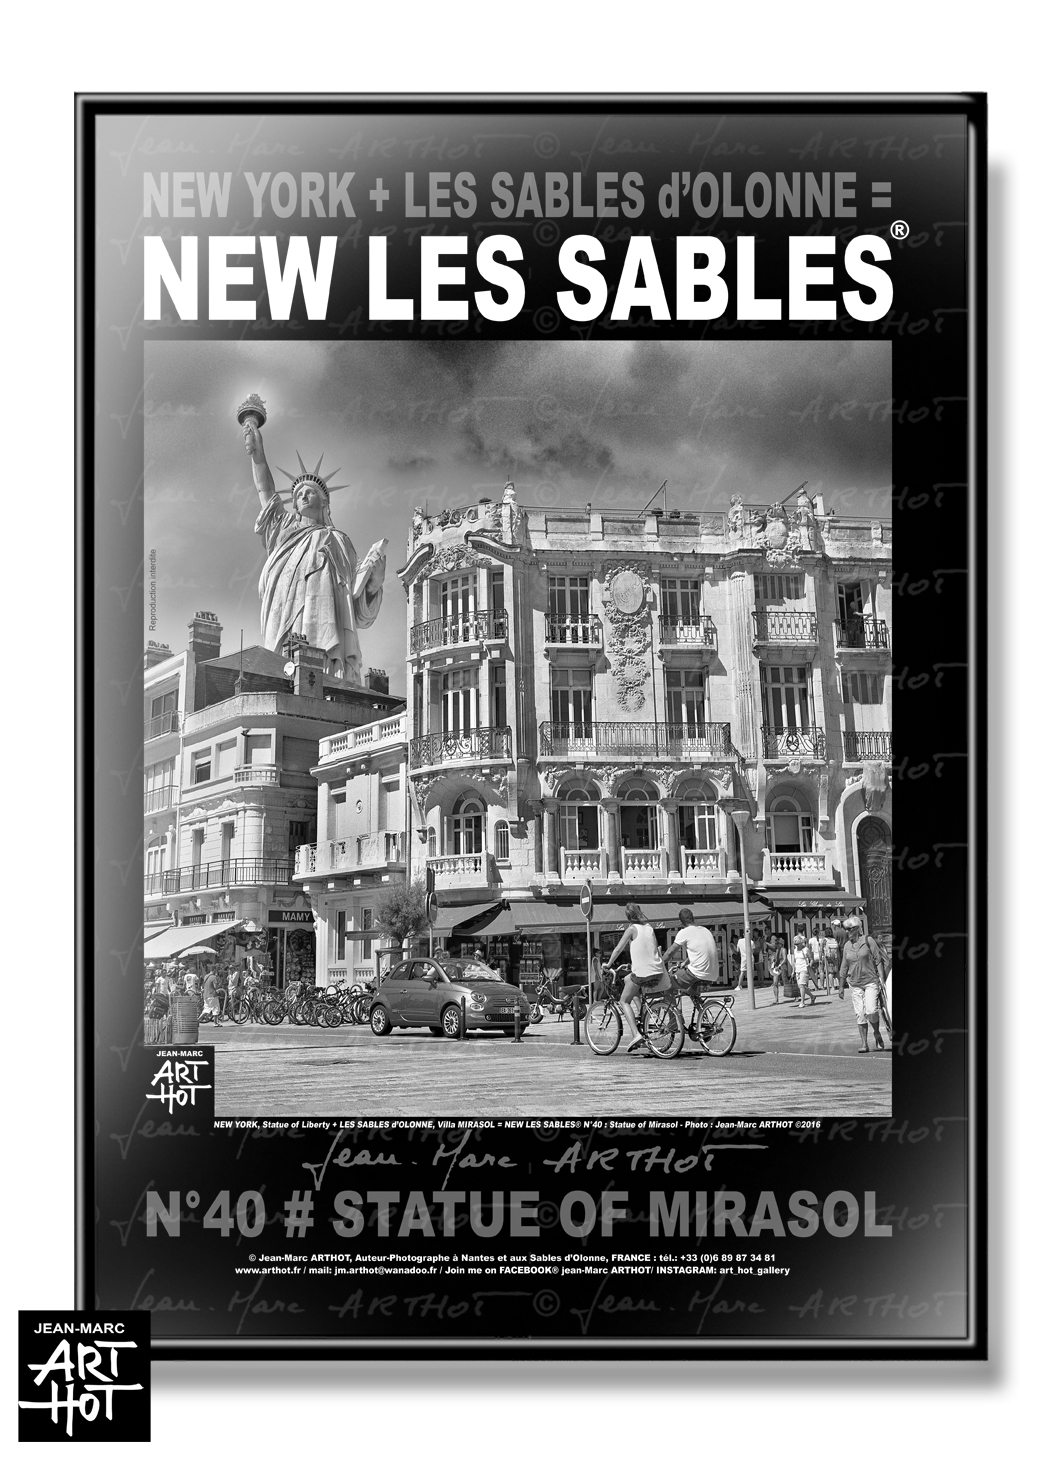 arthot-photo-art-b&w-new-york-vendee-sables-olonne-newlessables-040-mirasol-liberty-AFFICHE